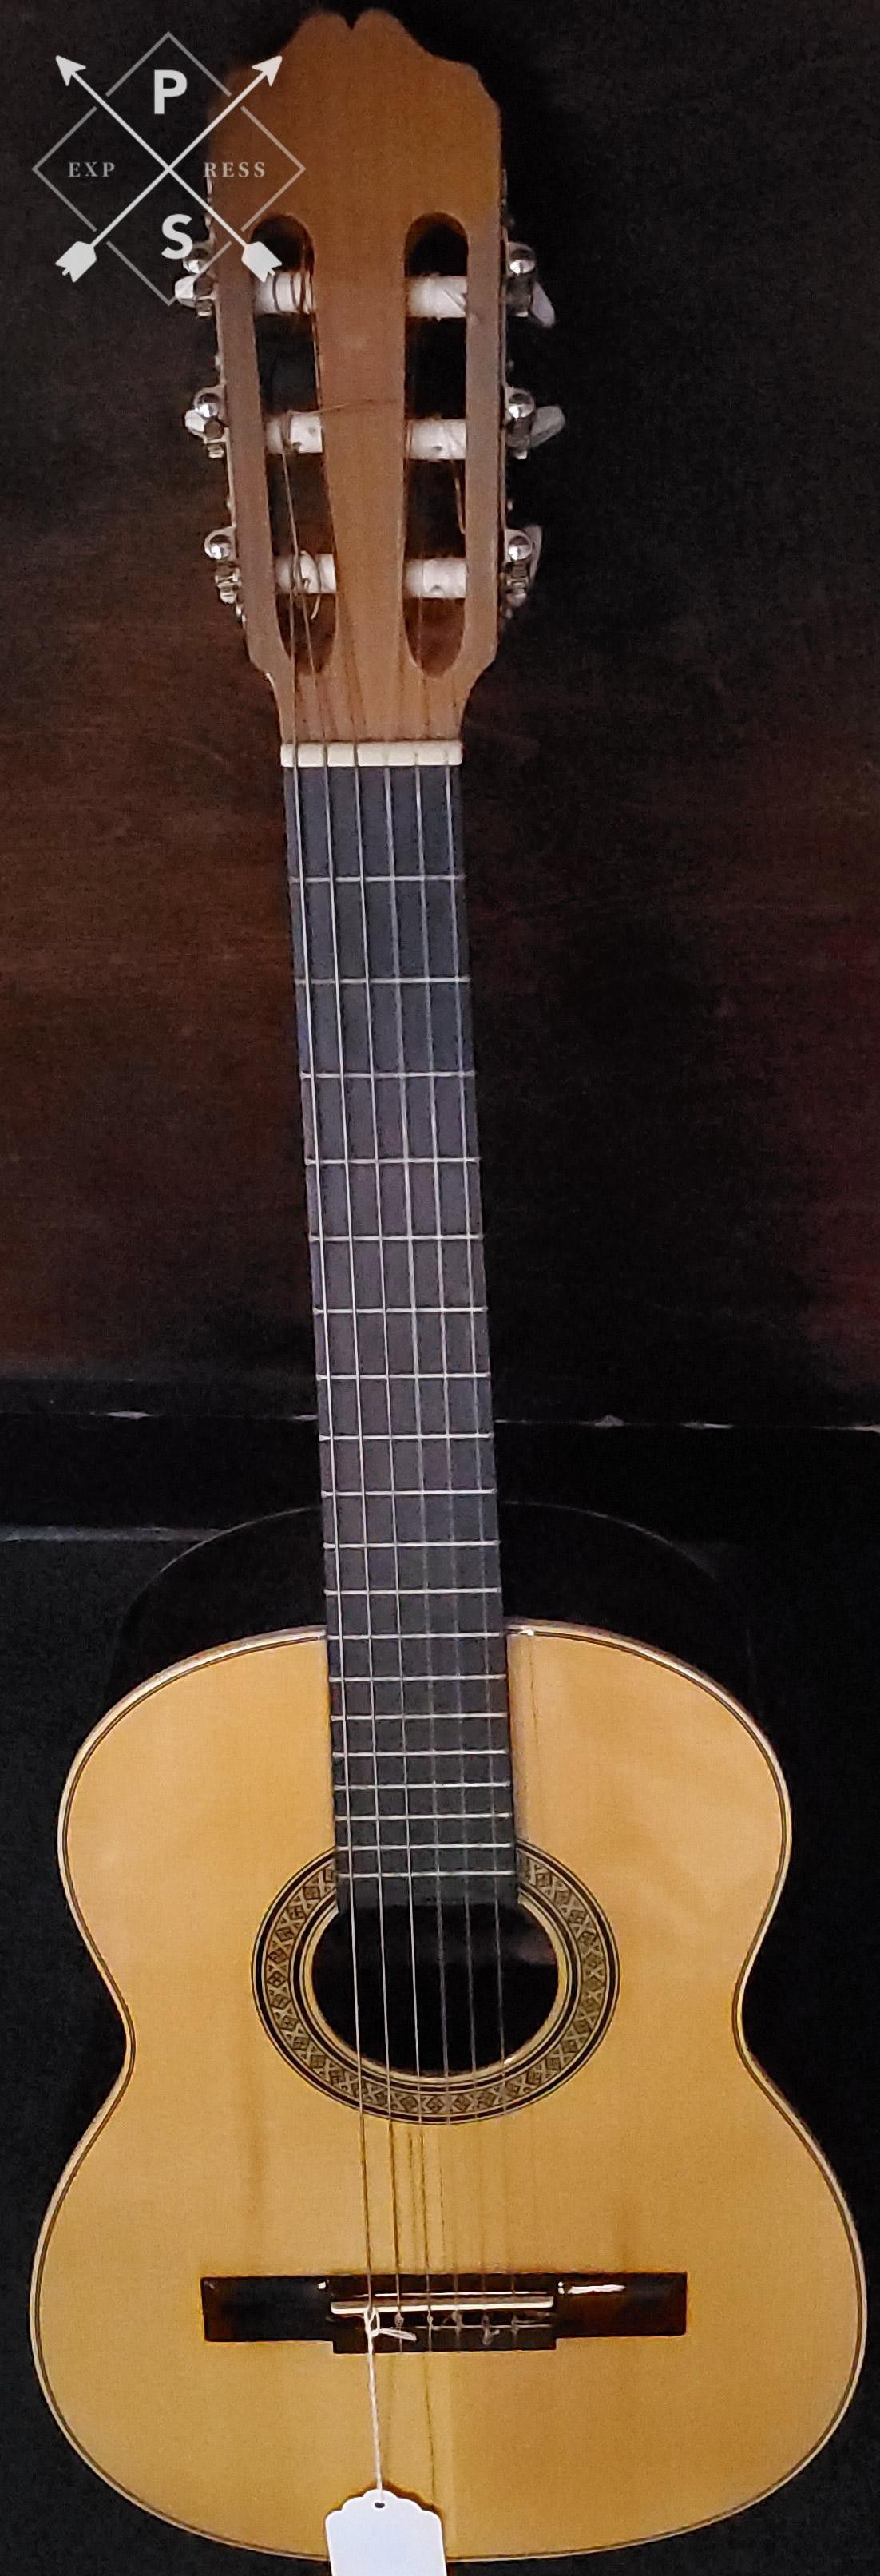 Artesano Requinto Acoustic guitar